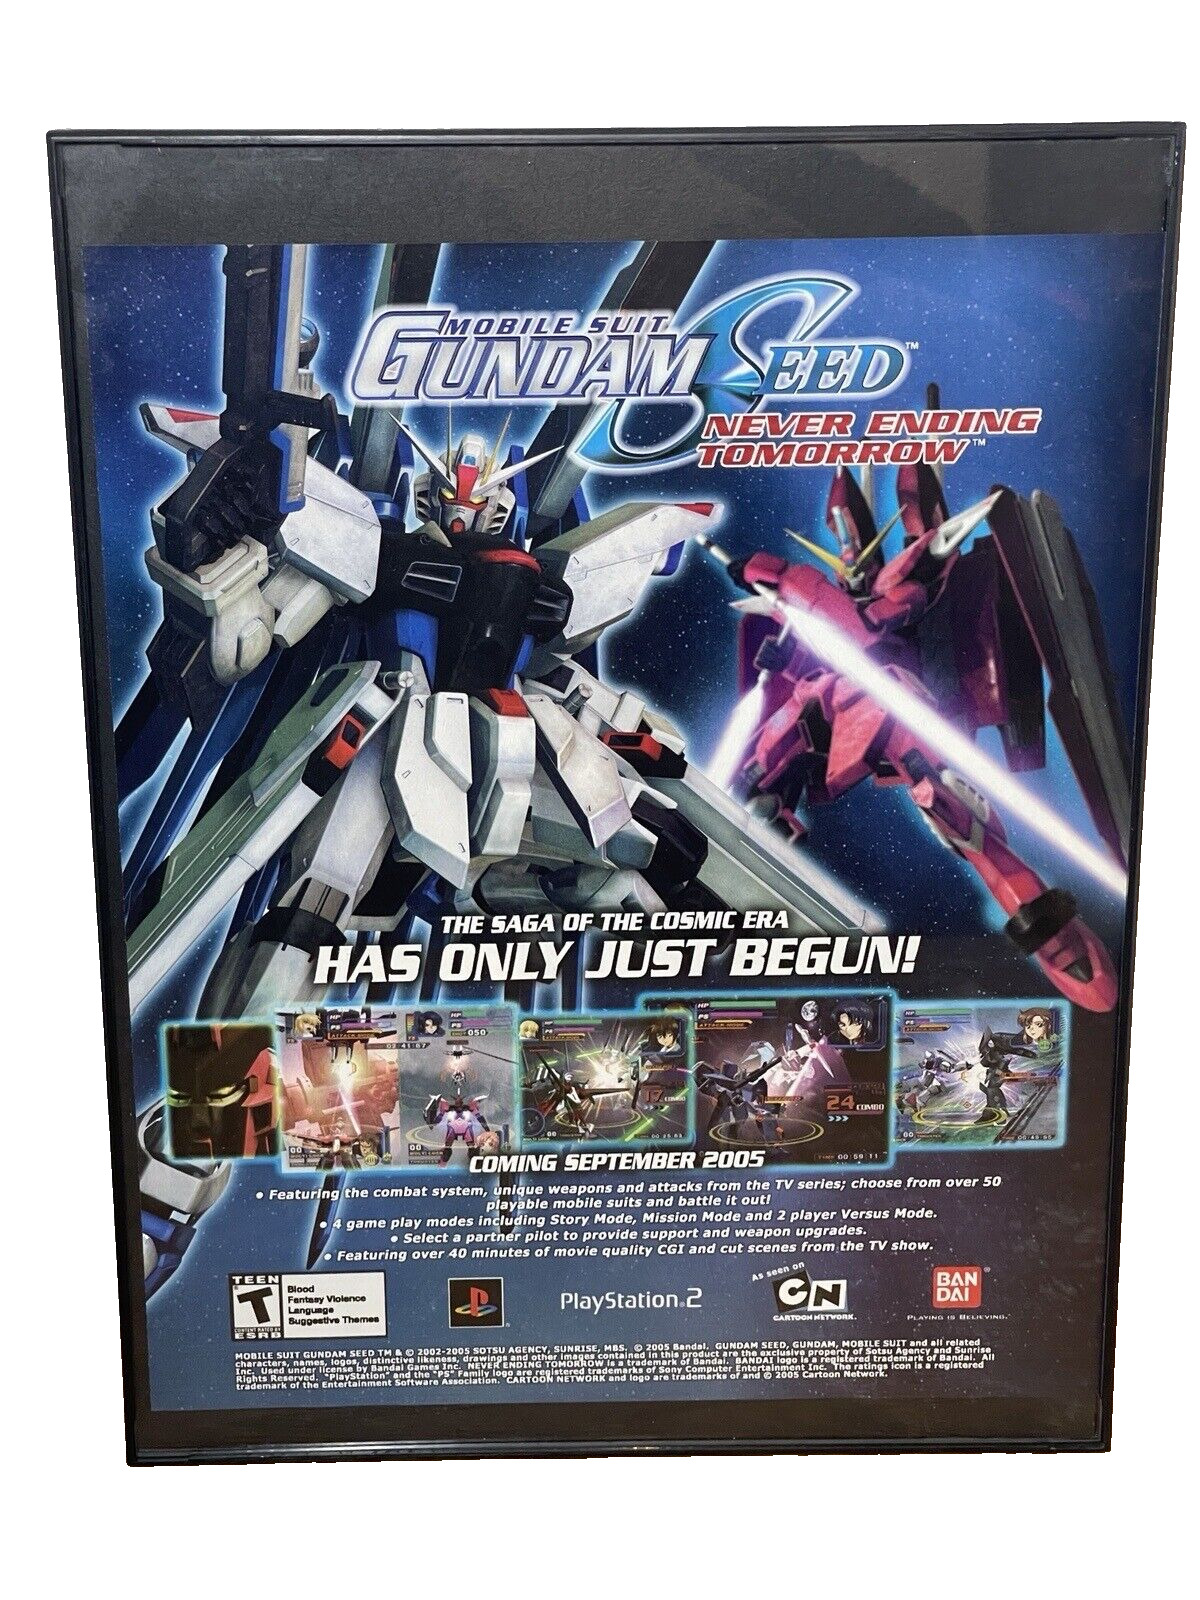 2005 Mobile Suit Gundam Seed Never Ending Tomorrow PS2 Print Ad Promo Art Framed